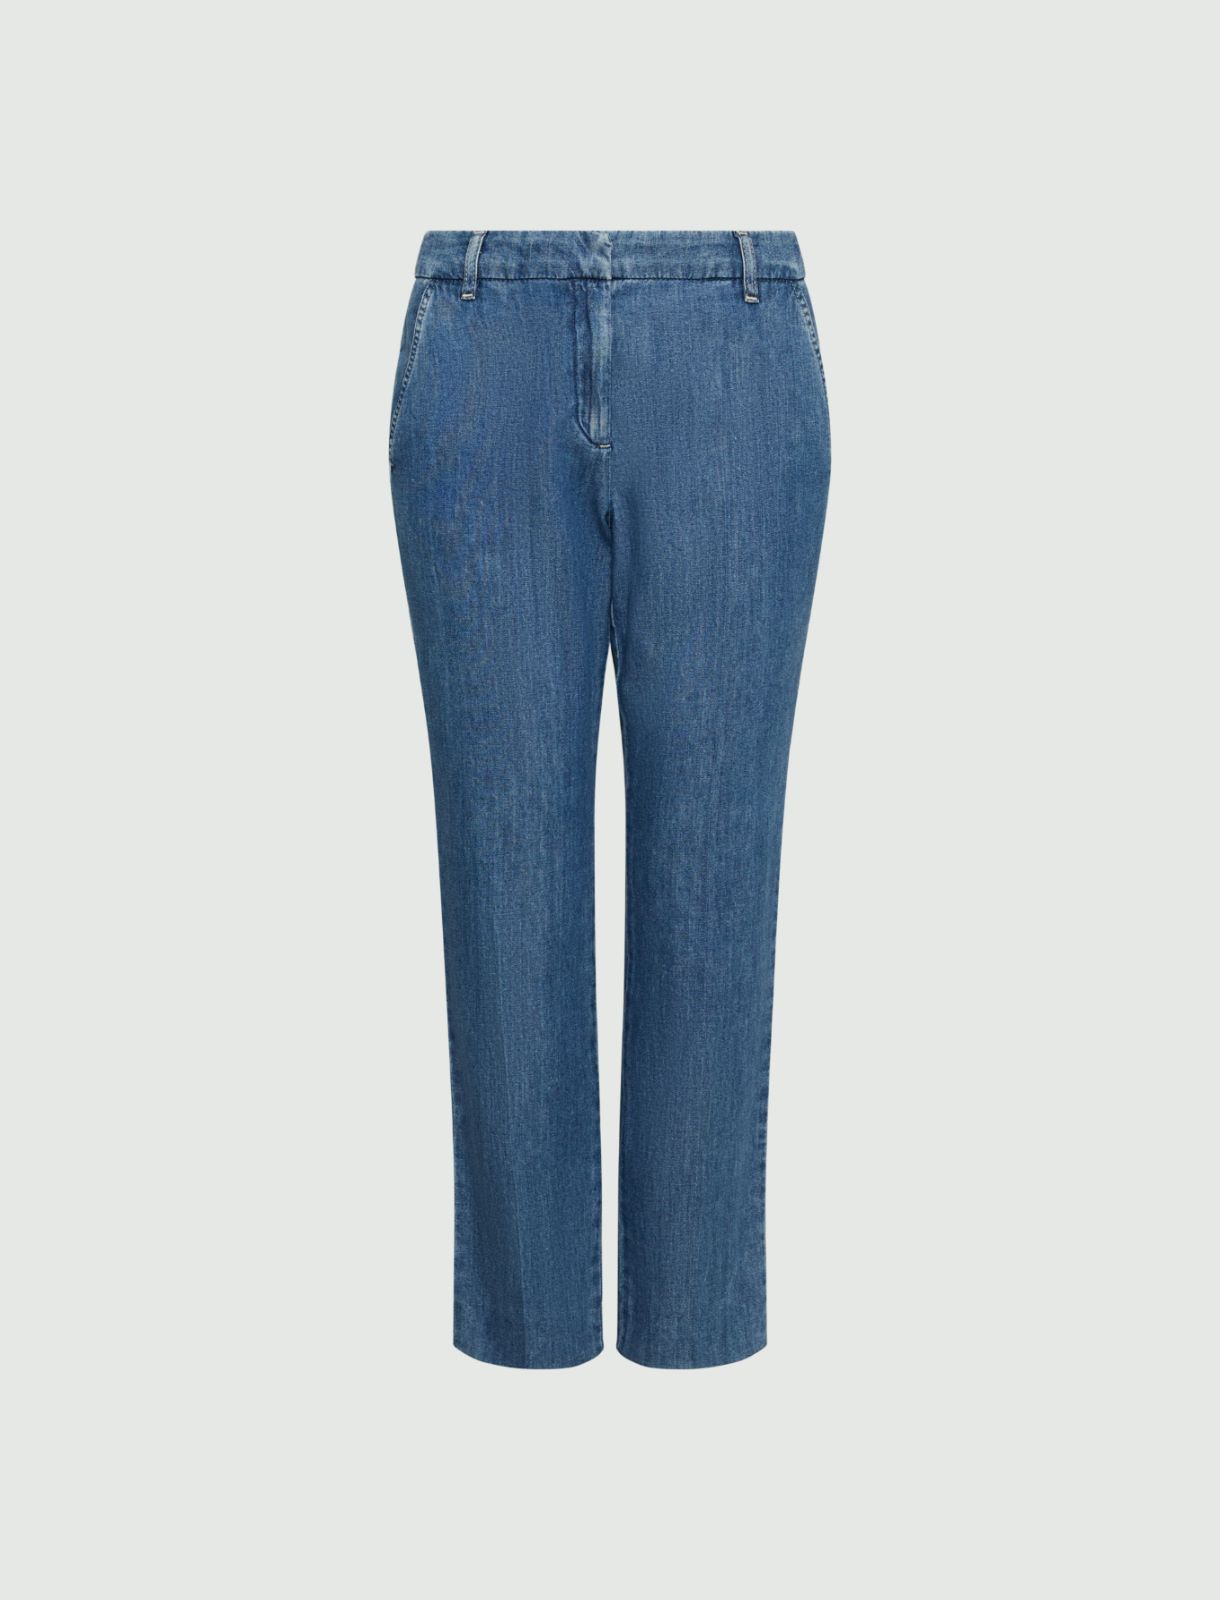 Chino jeans - Blue jeans - Marina Rinaldi - 6